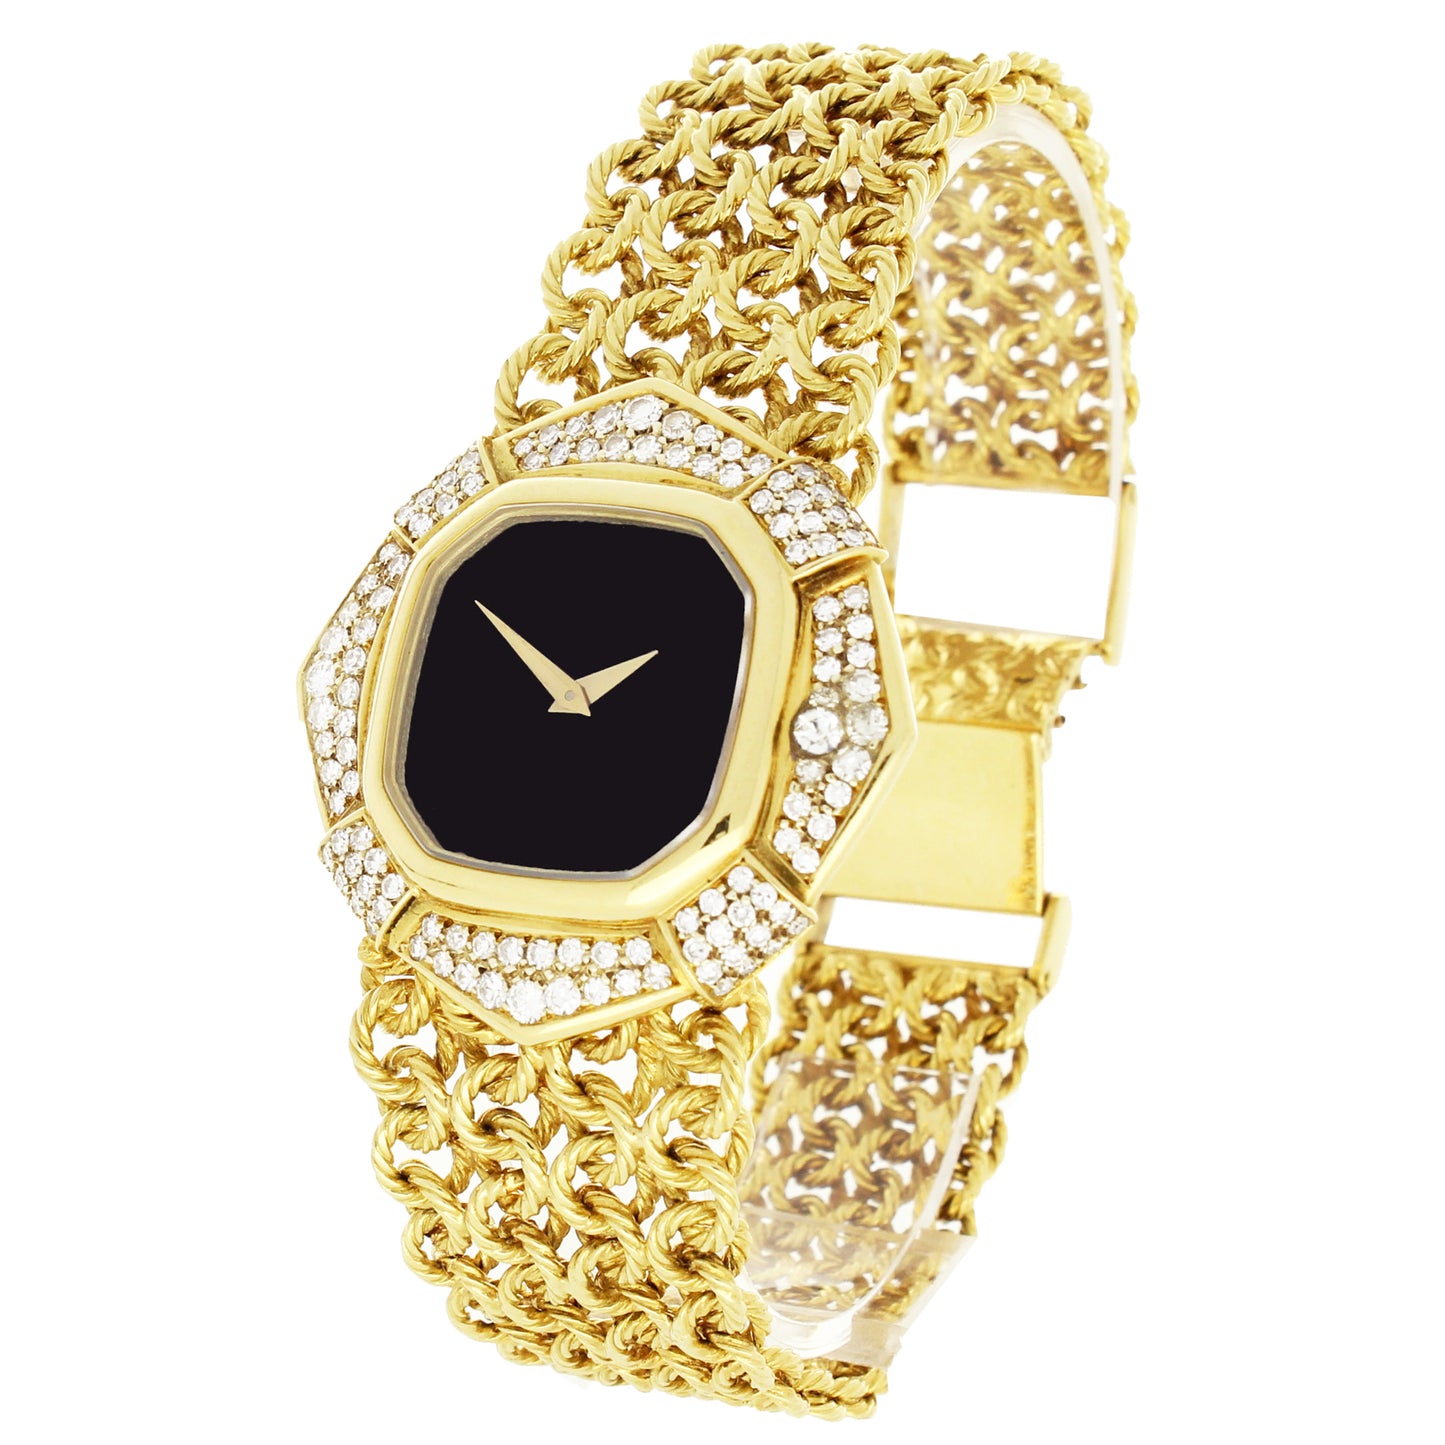 18ct yellow gold OMEGA diamond set bracelet watch. Made 1975